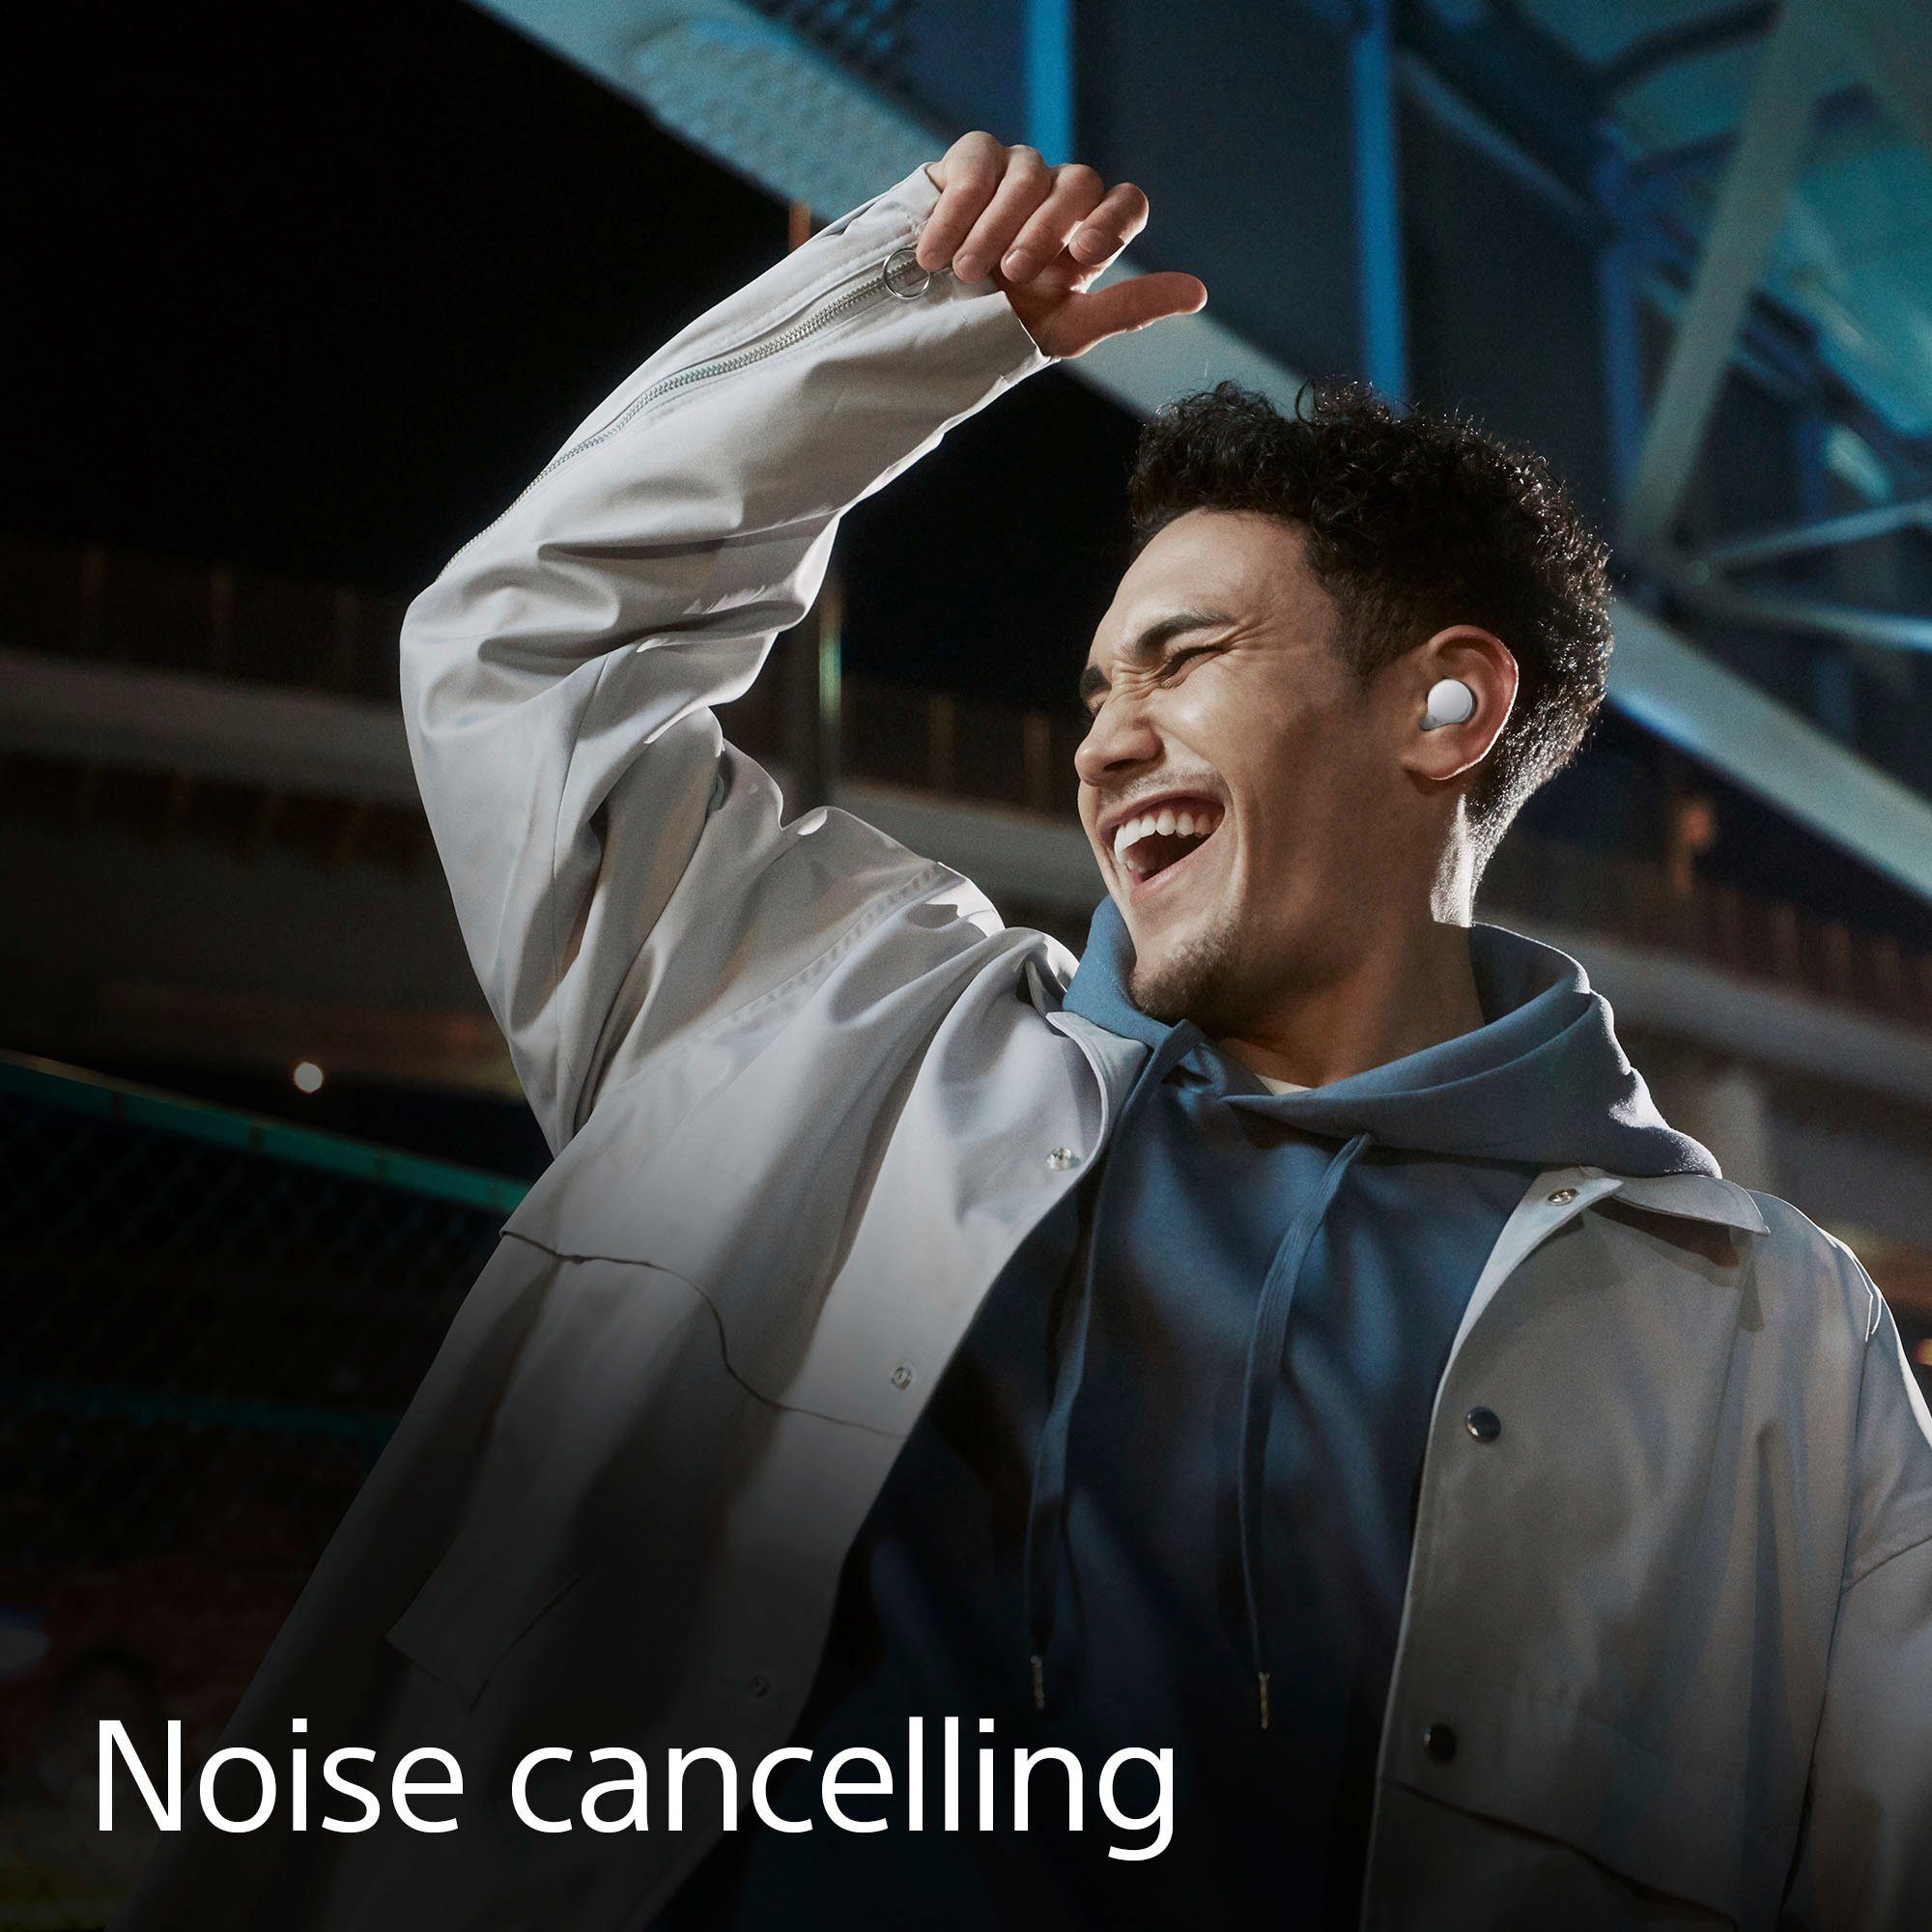 Wireless, NFC, st. weiß Bluetooth, wireless Sony LinkBuds Touch-Steuerung, (Noise-Cancelling, Cancelling, S True In-Ear-Kopfhörer Akkulaufzeit) Noise 20